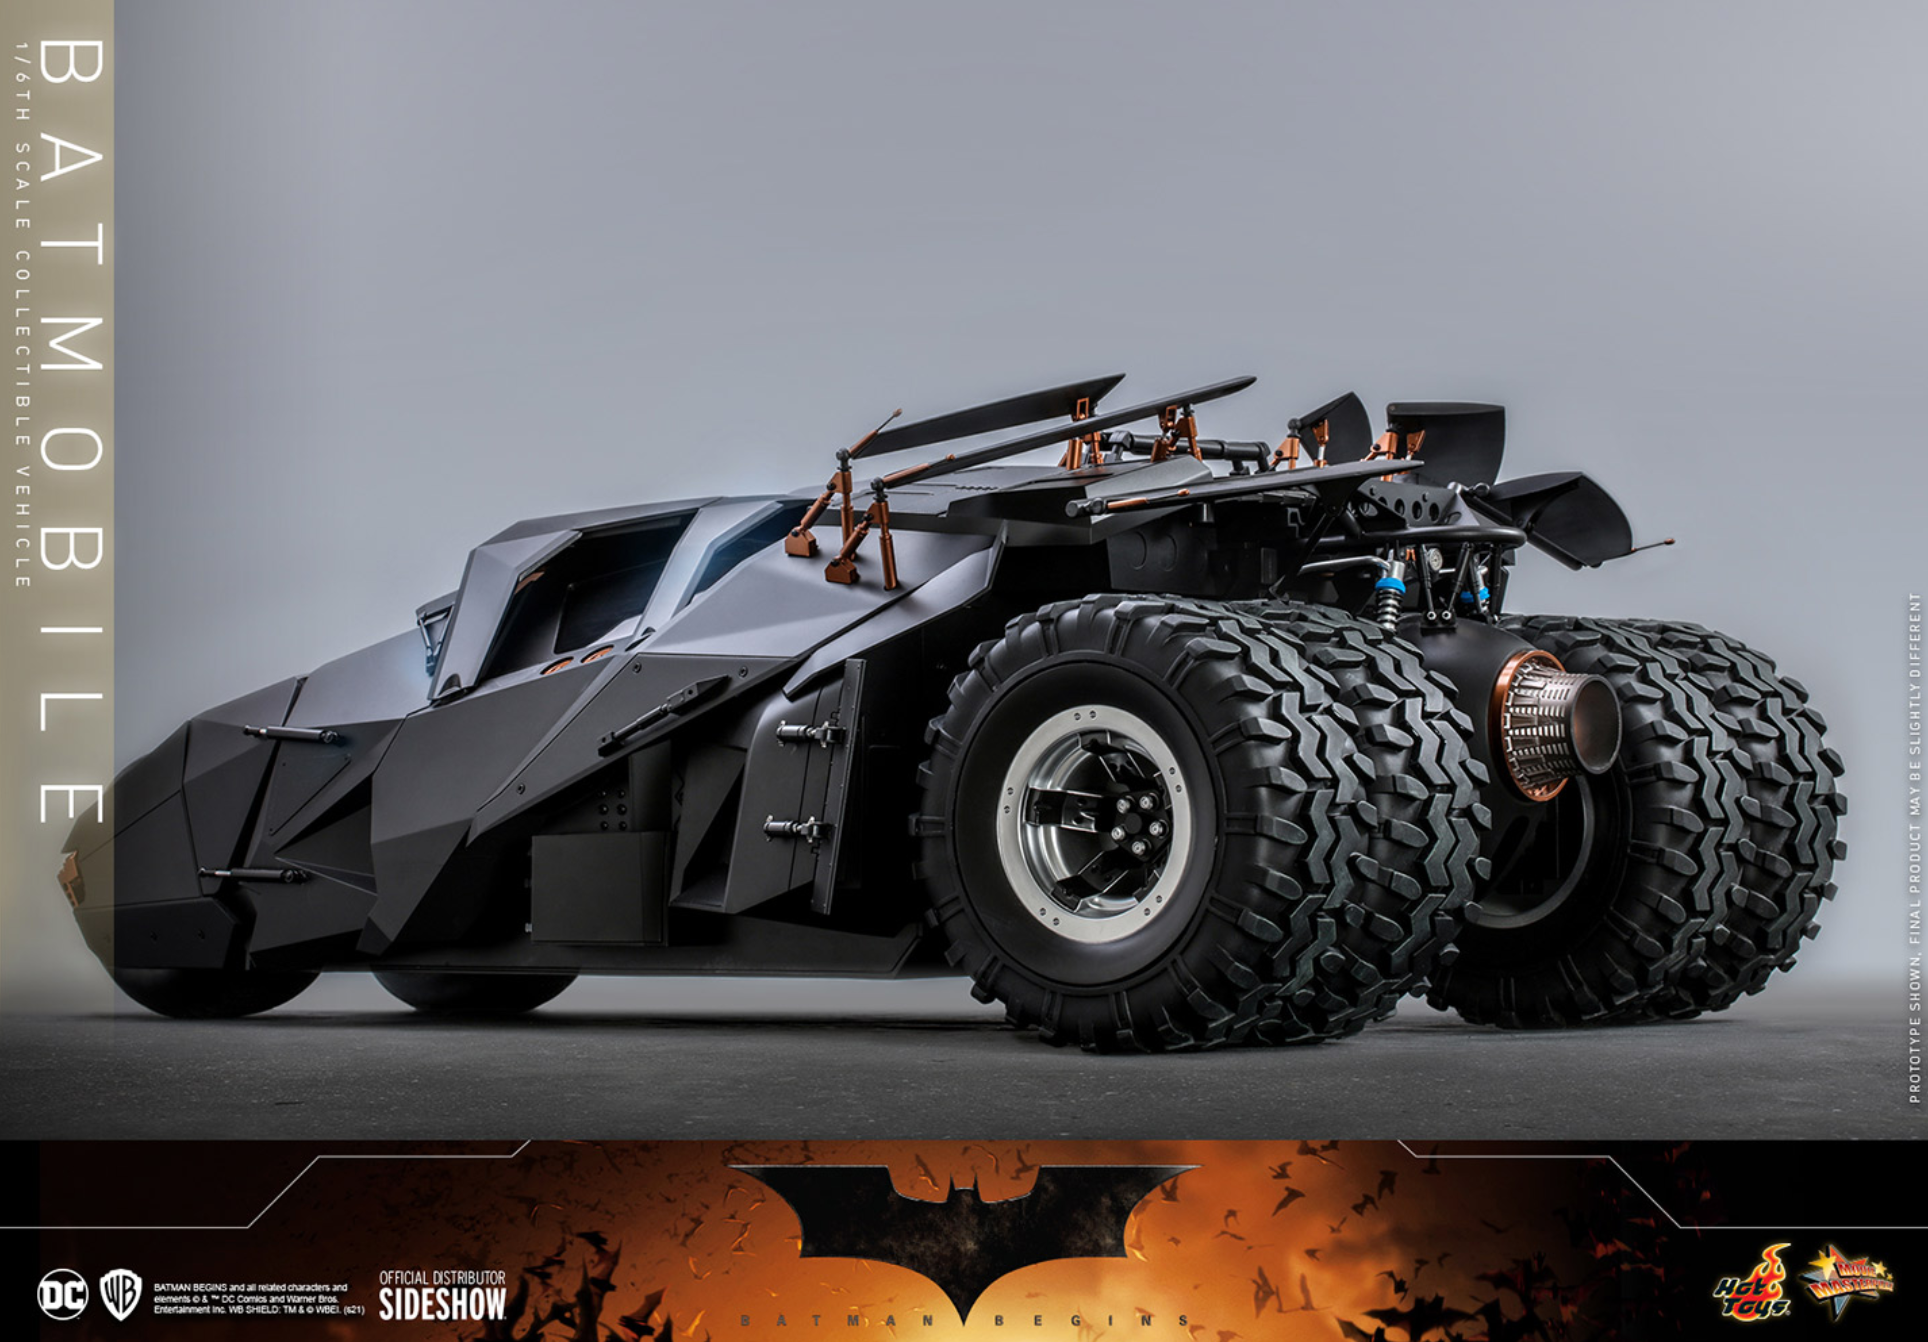 Hot Toys Batman Begins Batmobile